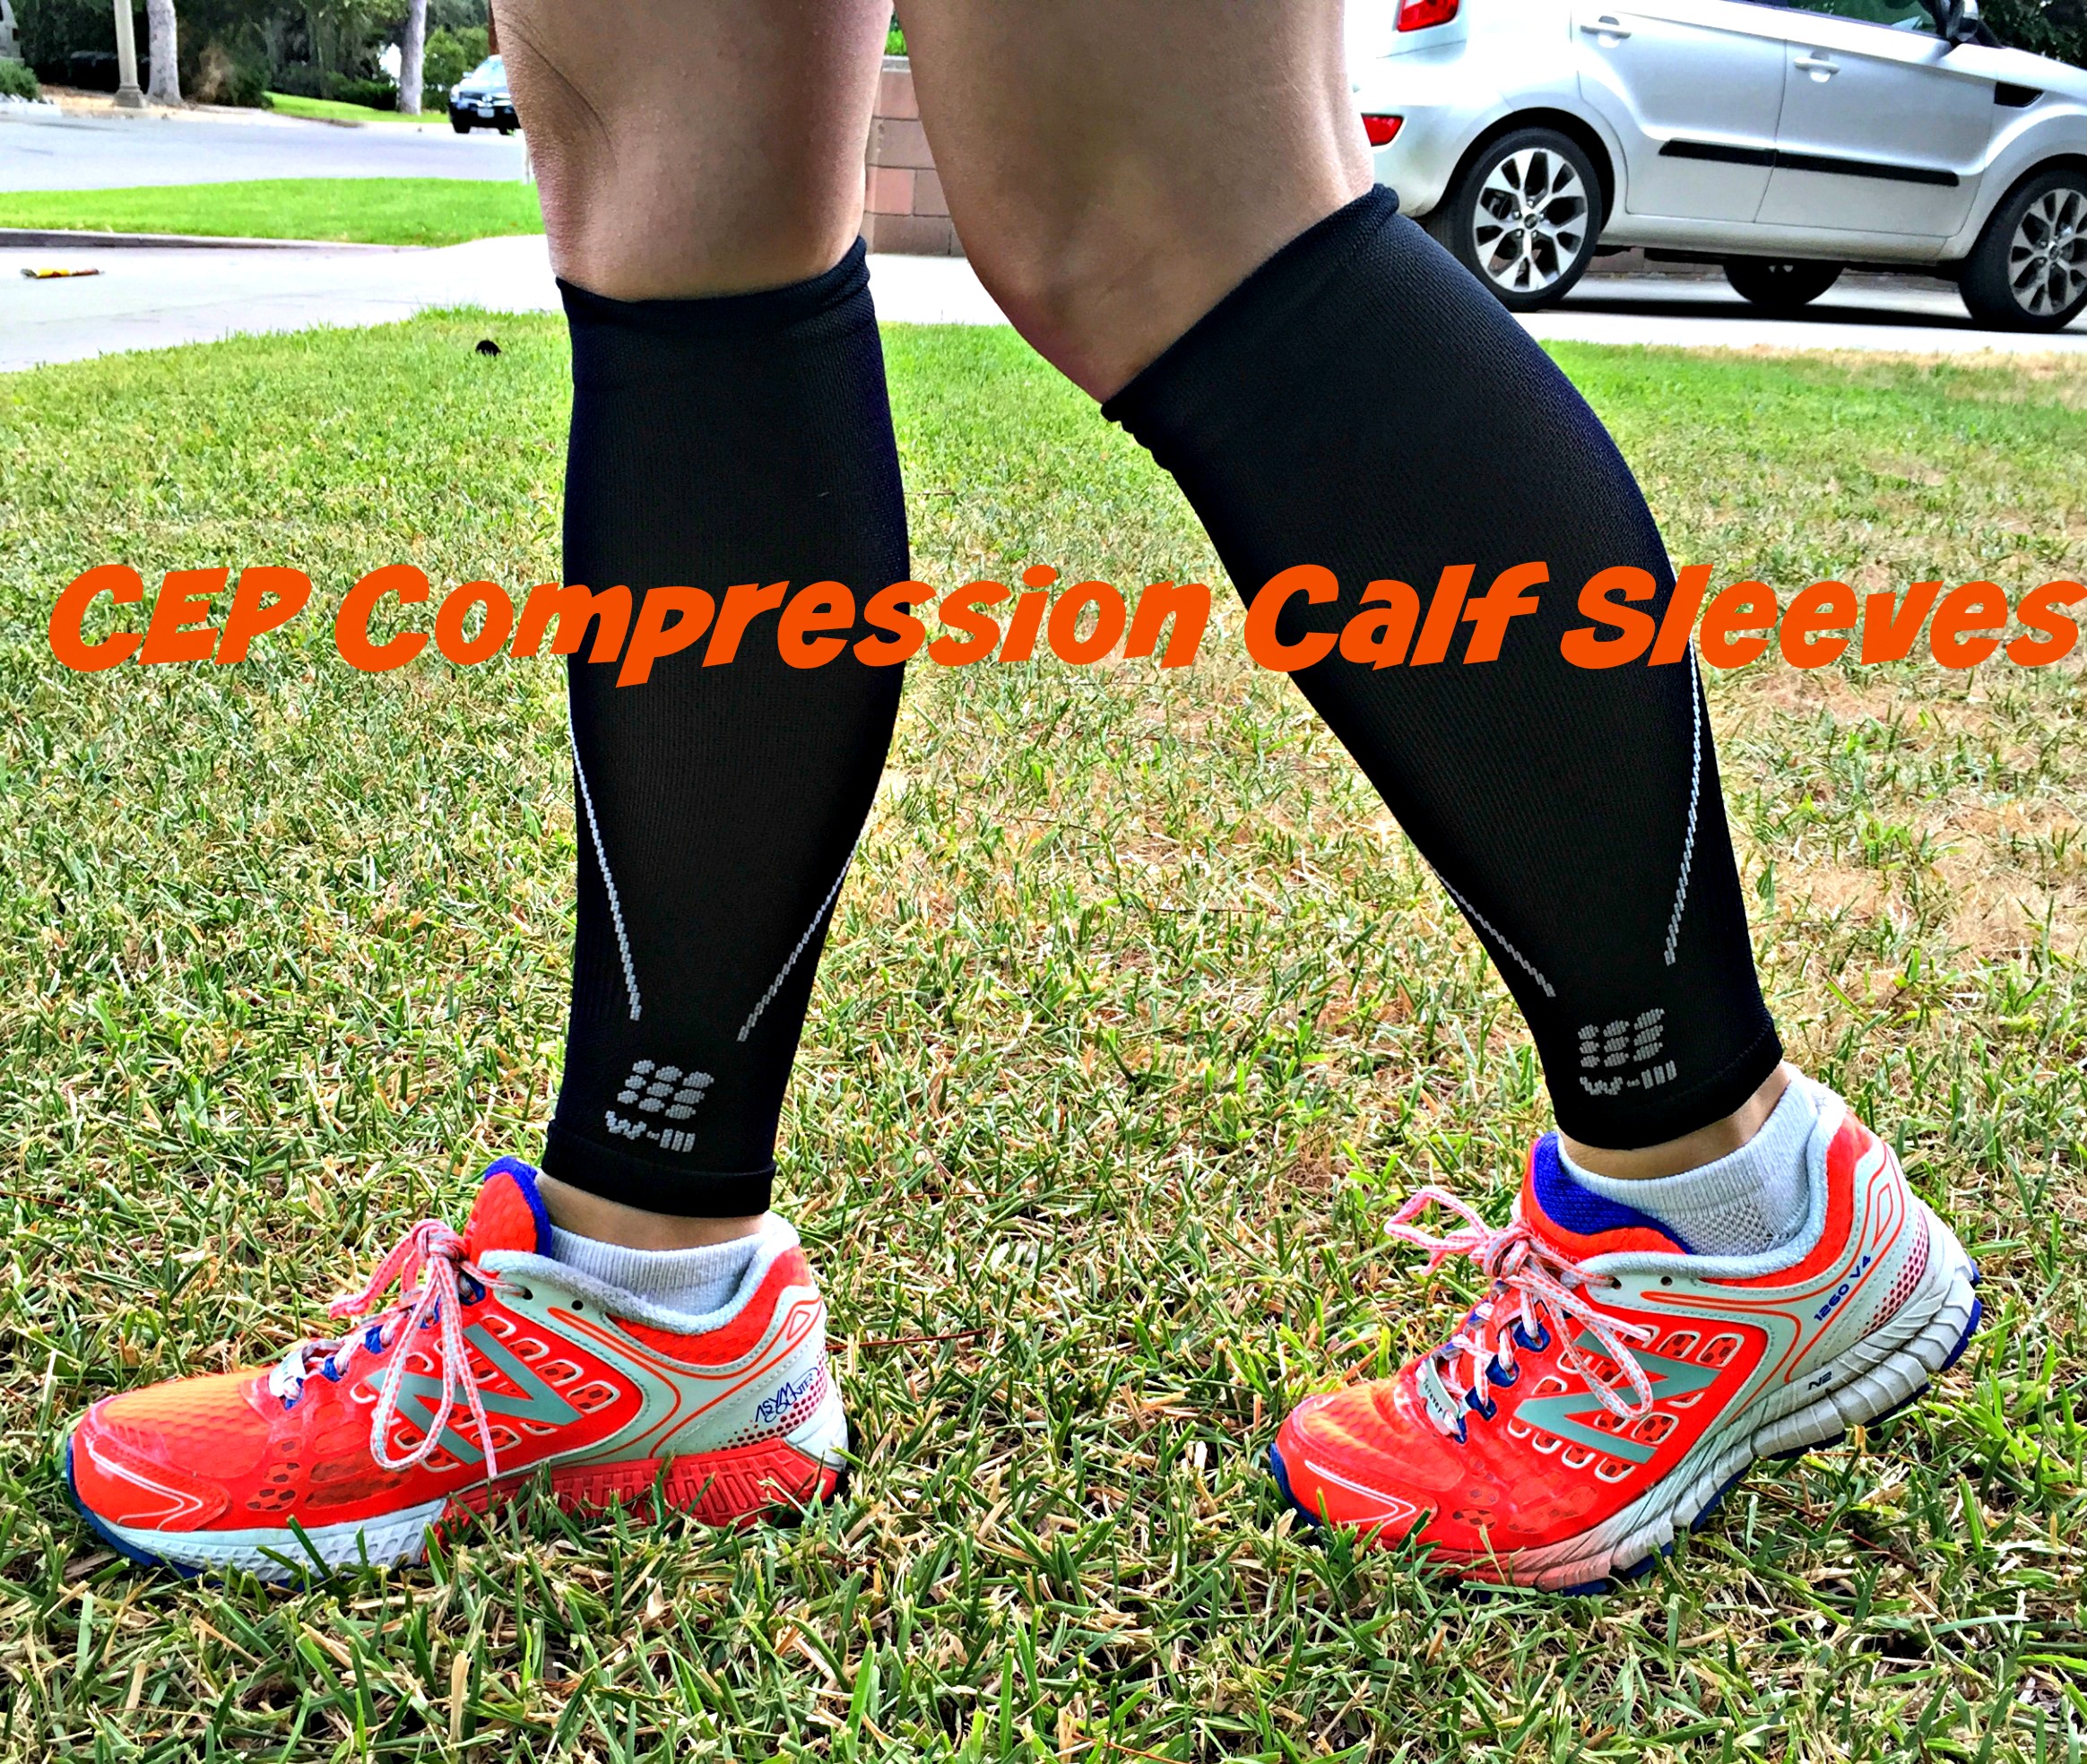 CEP Compression Calf Sleeve